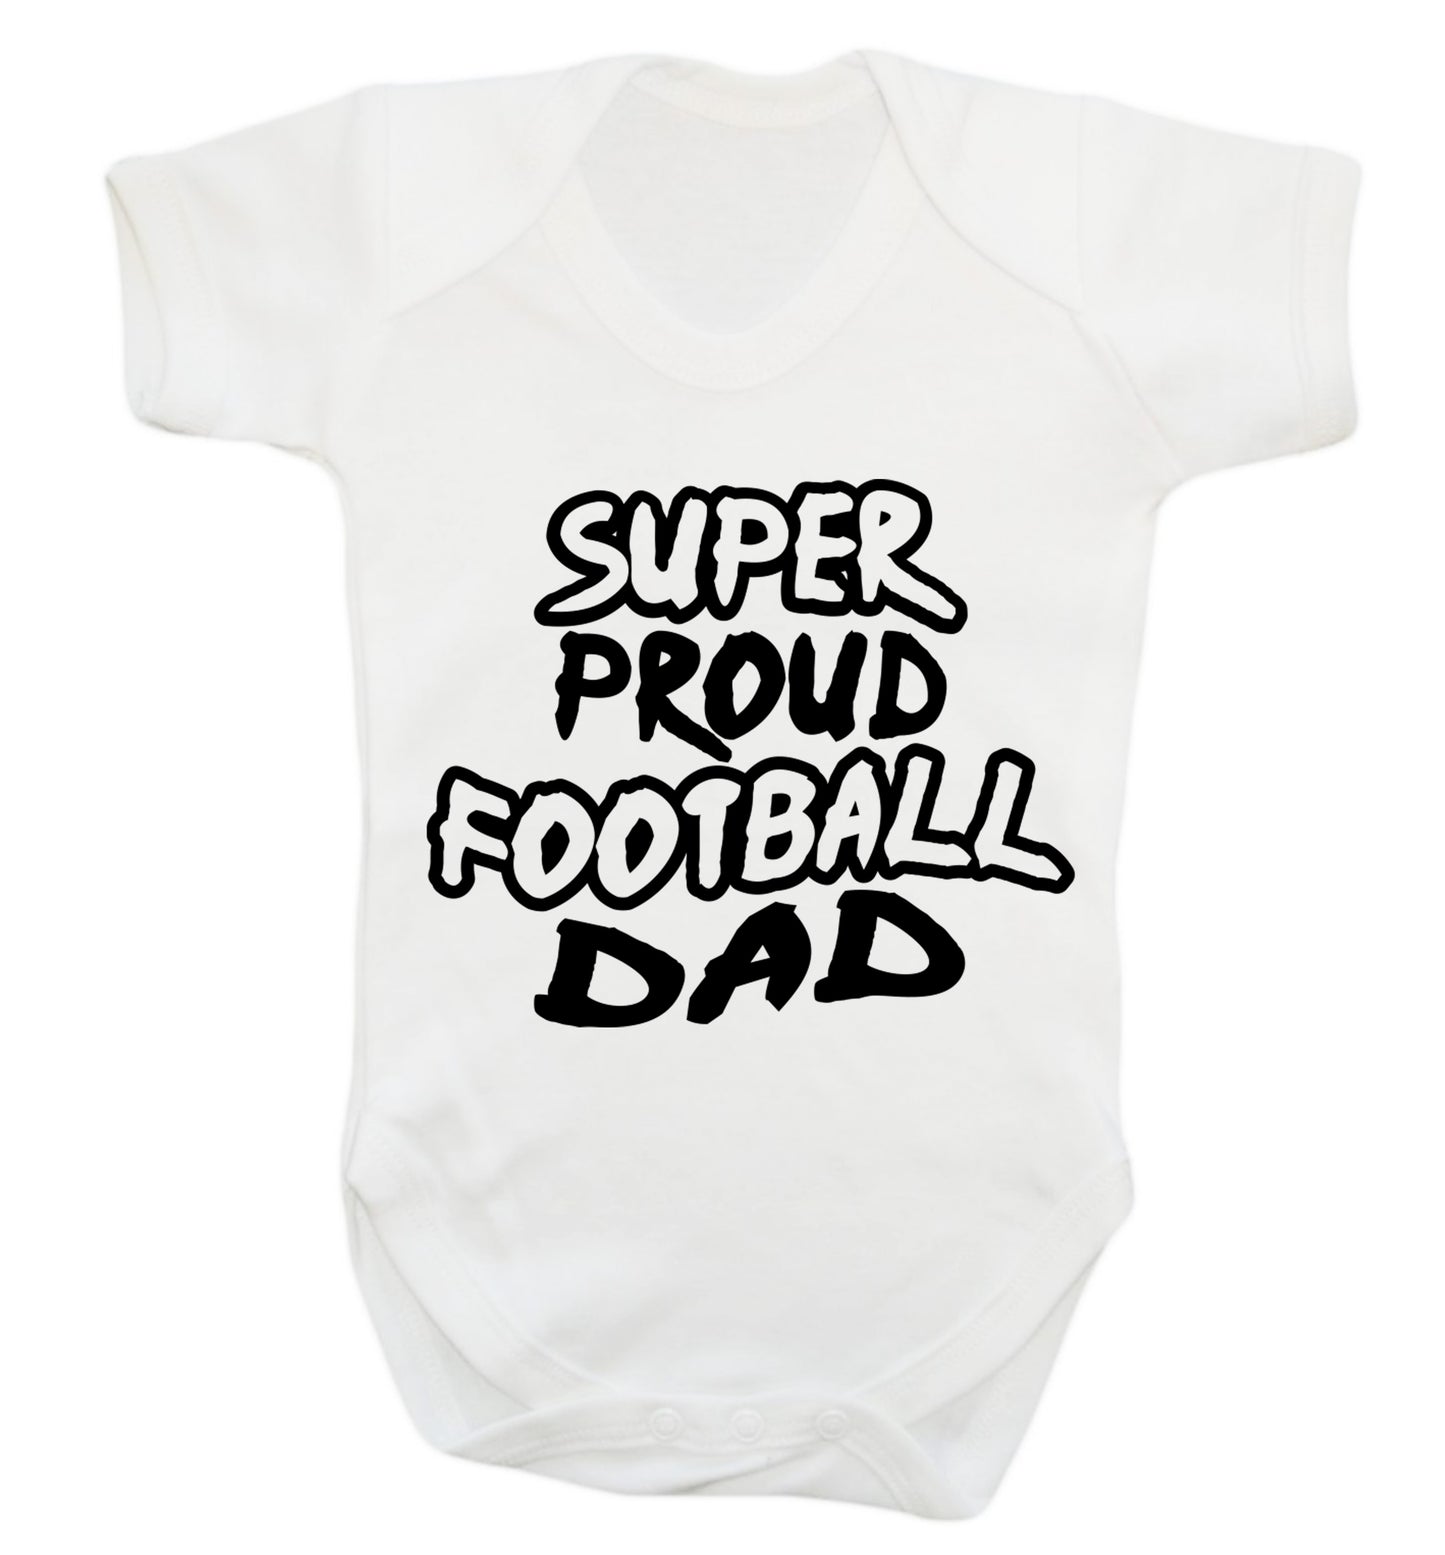 Super proud football dad Baby Vest white 18-24 months